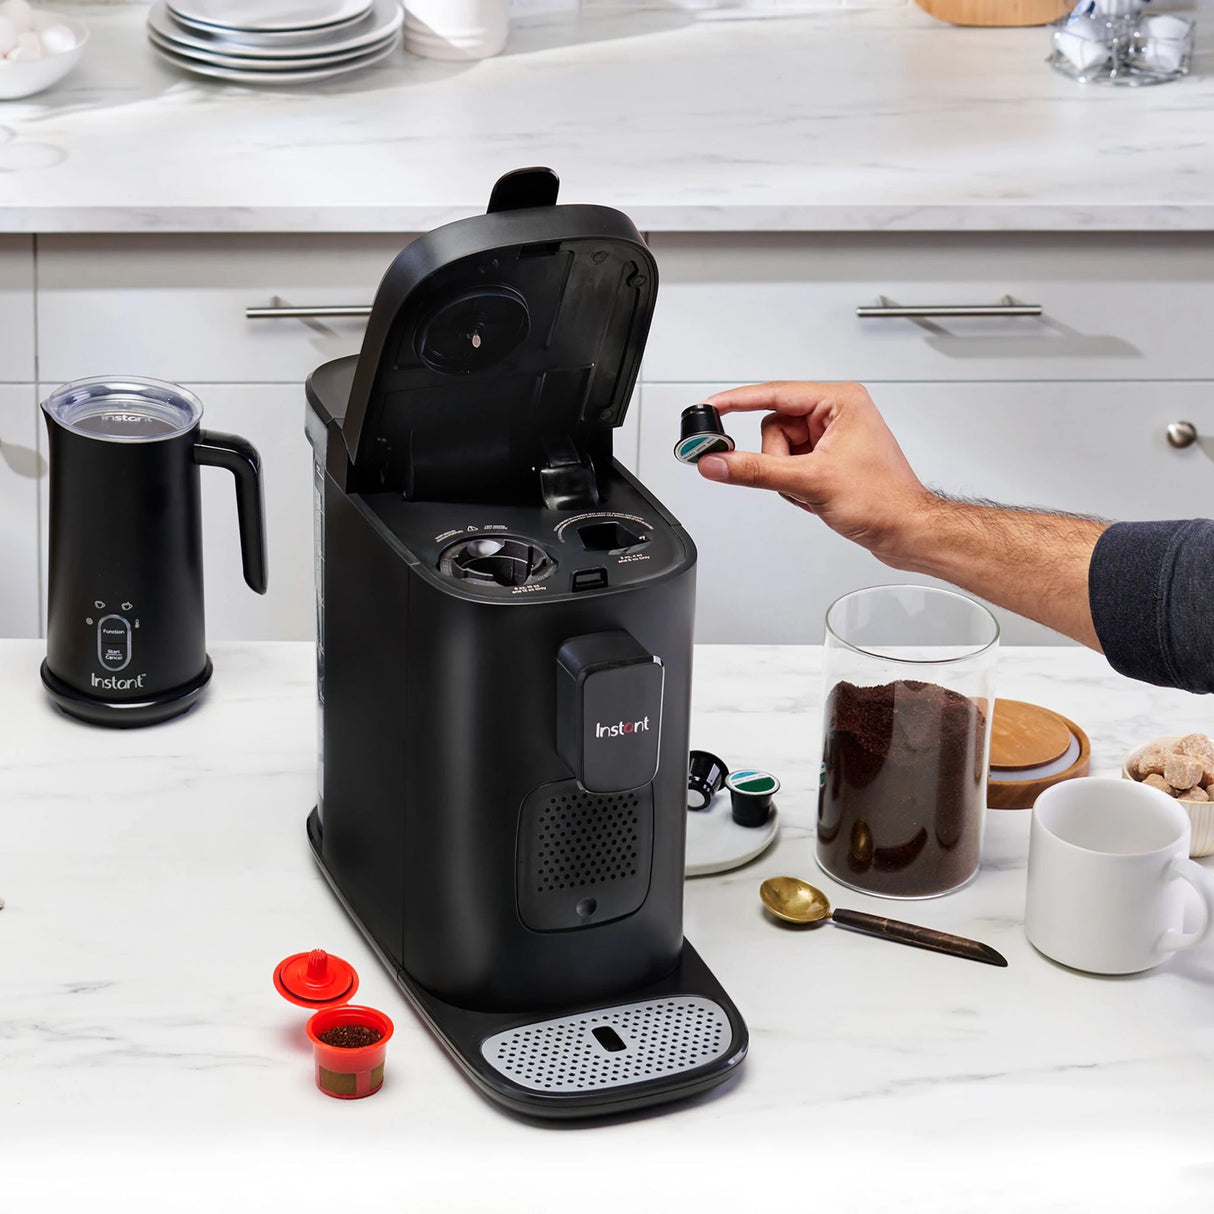  Instant™ Dual Pod Coffee Maker open putting pod into machine 